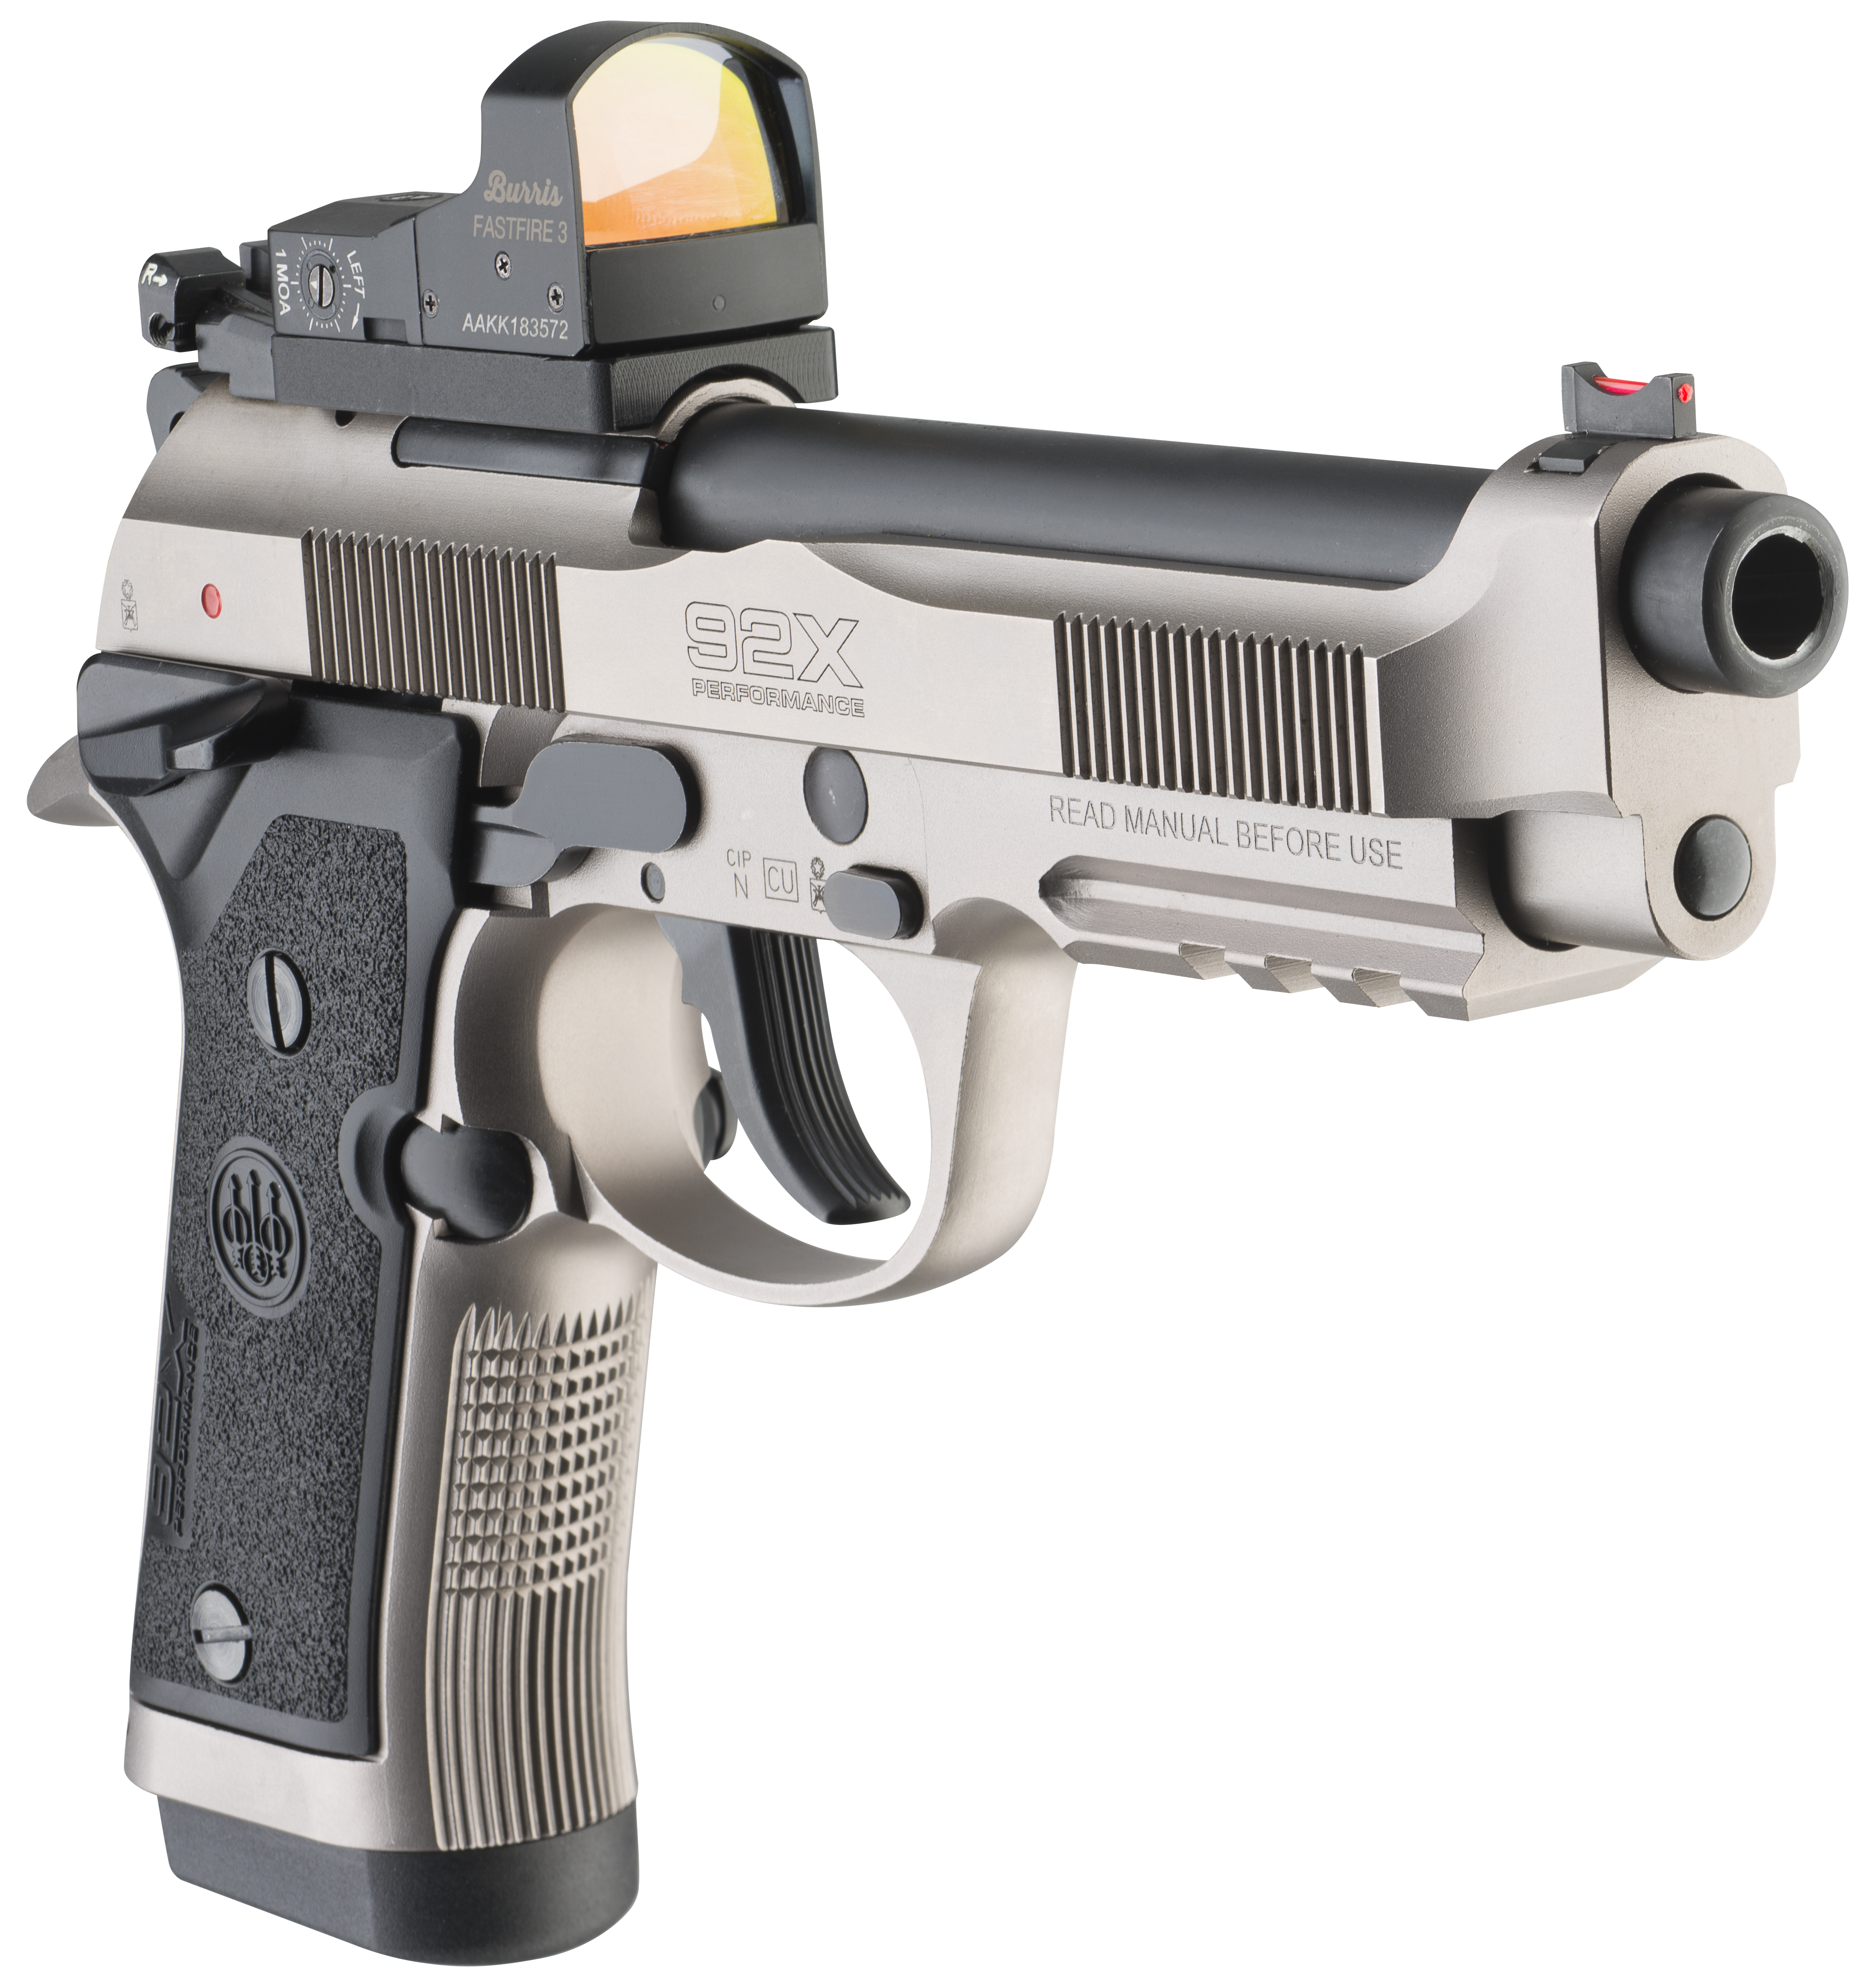 92x performance beretta pistol red dot optic ready